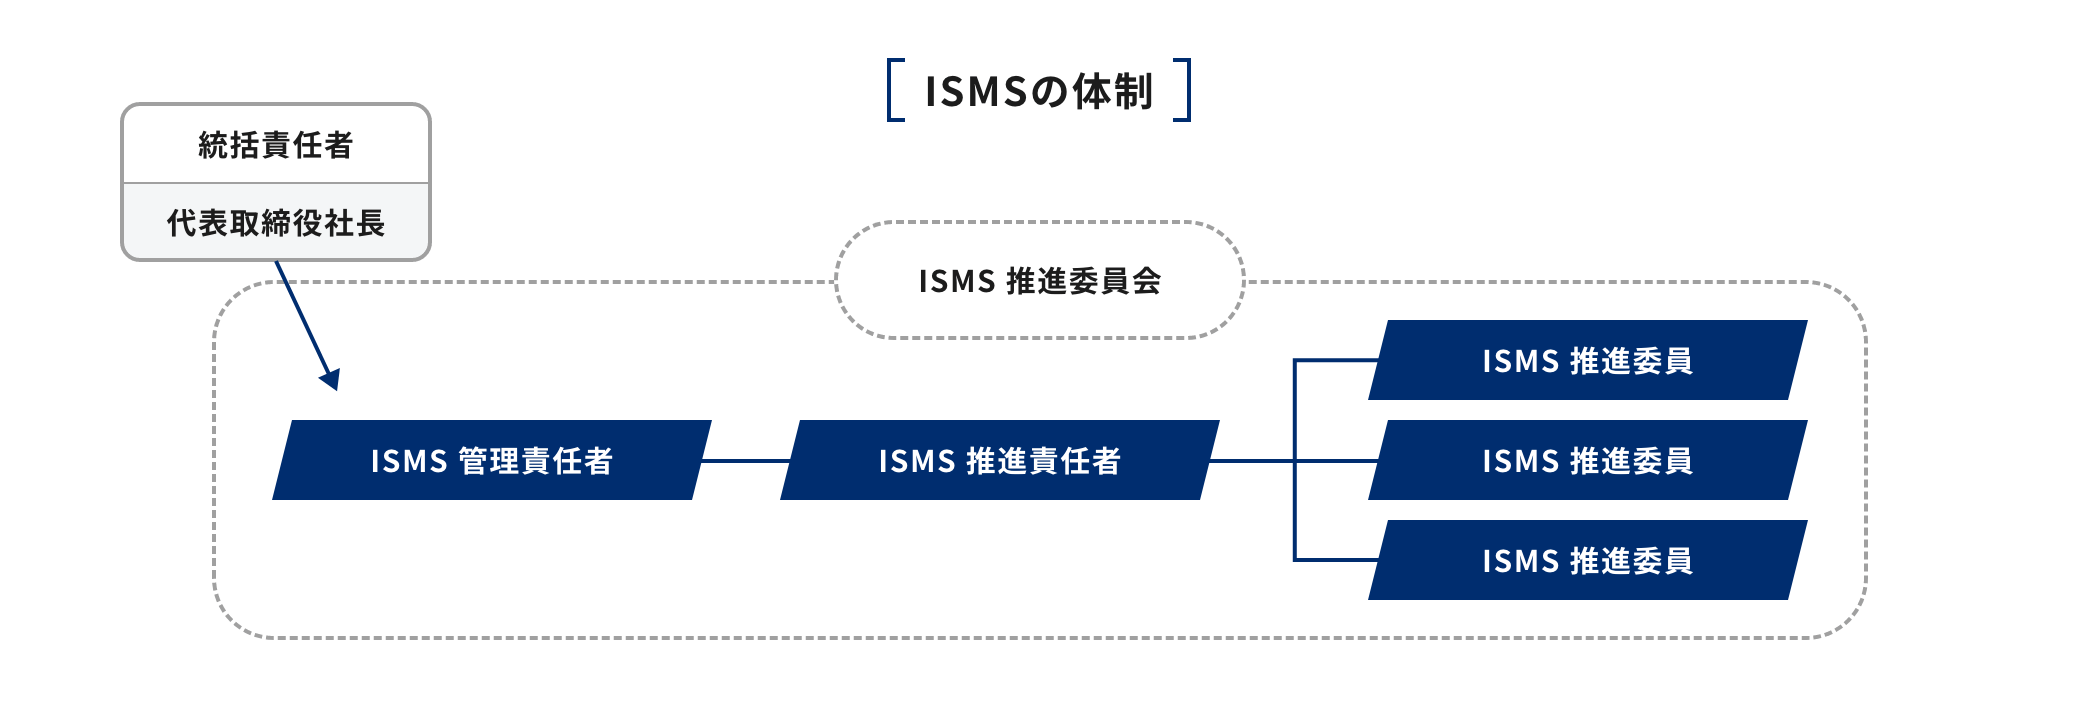 ISMSの体制